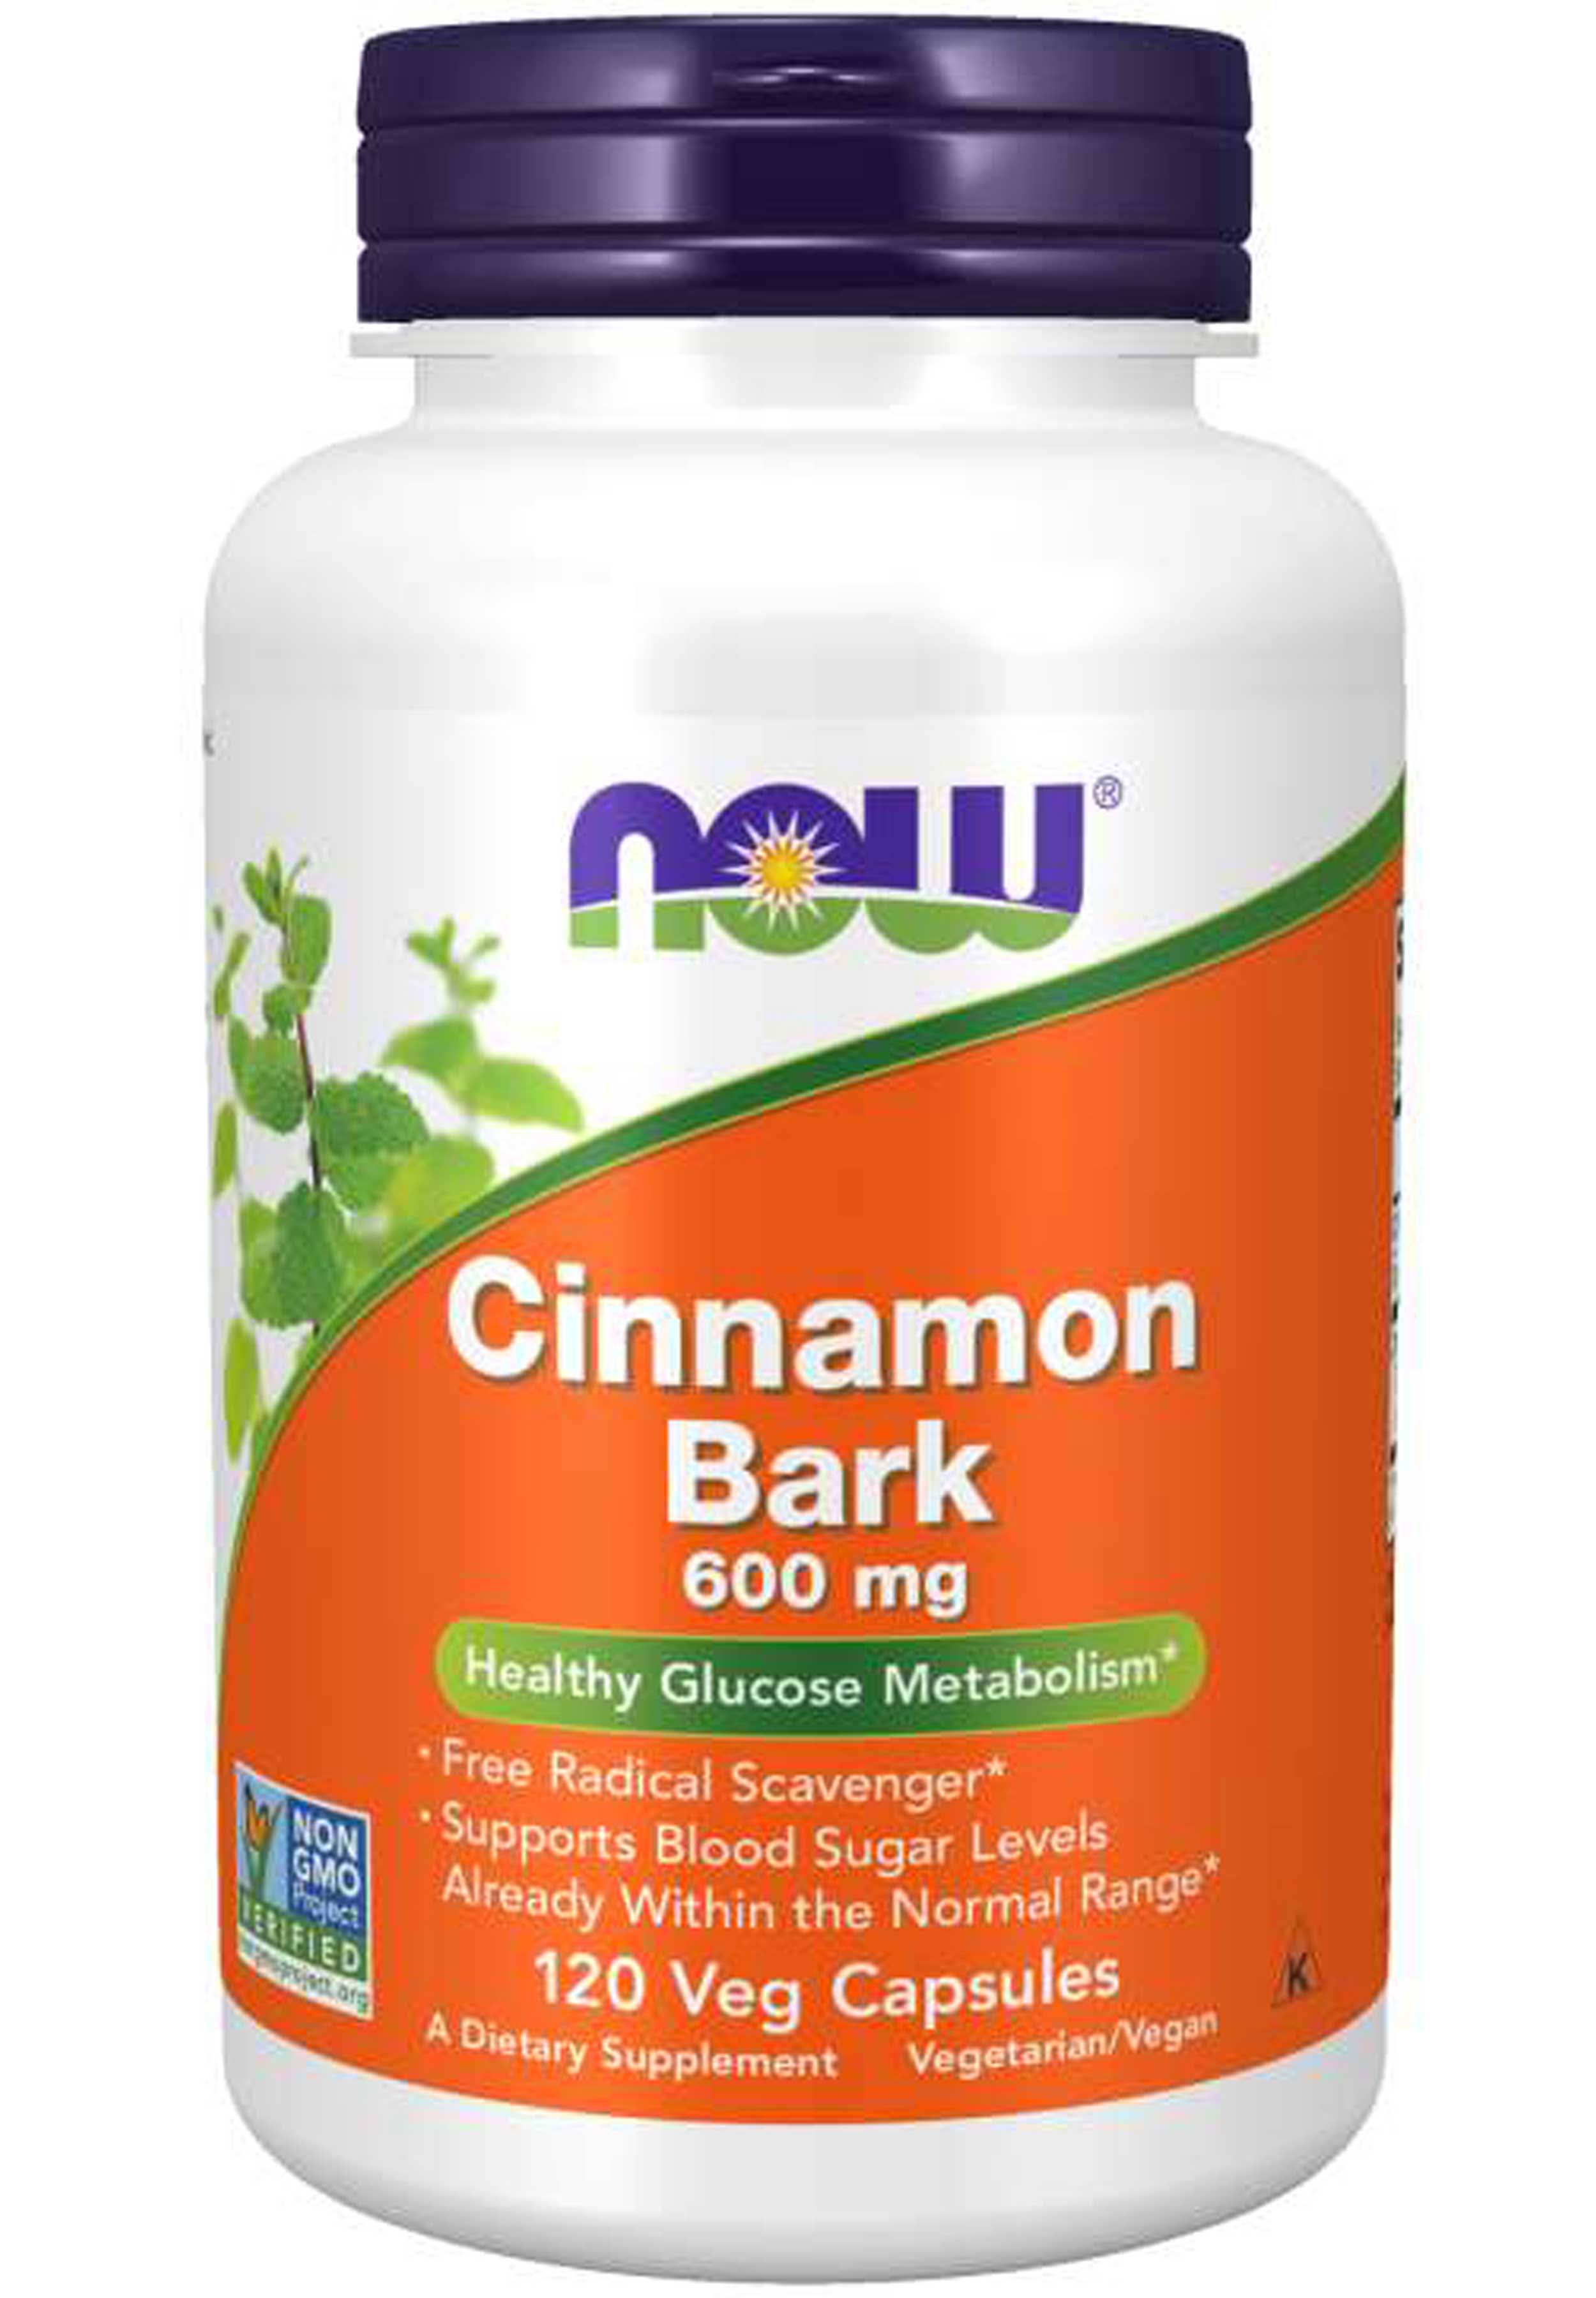 Now Foods Cinnamon Bark - 600 mg, 120 Capsules